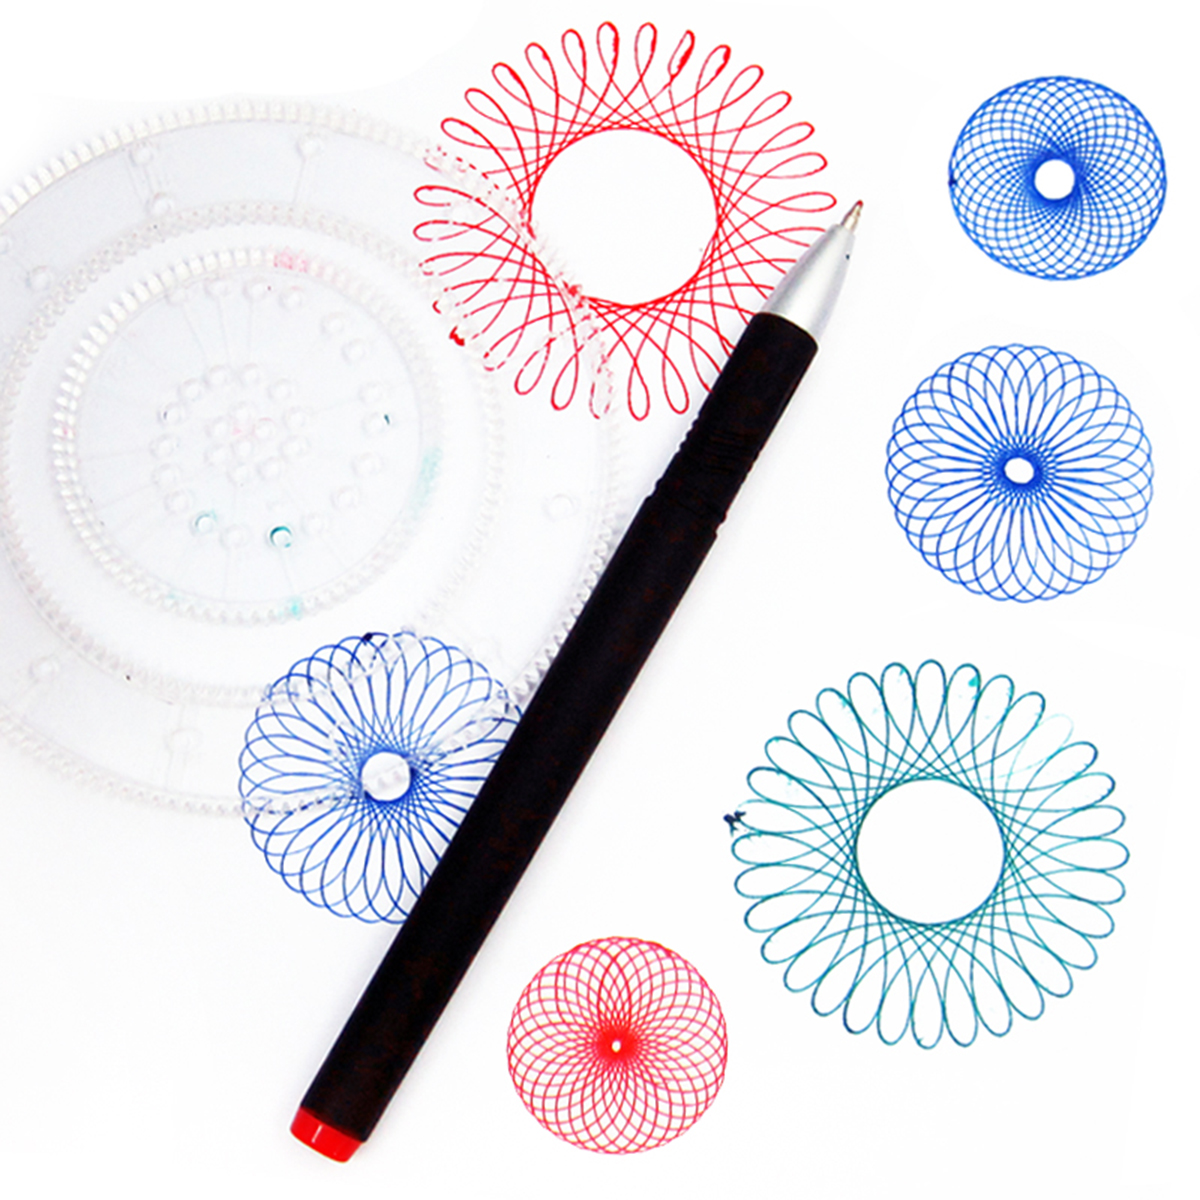 Original Spirograph Design Set Geometric Drawing Ruler Kids Spiral Art Craft Creation Education Toy 19